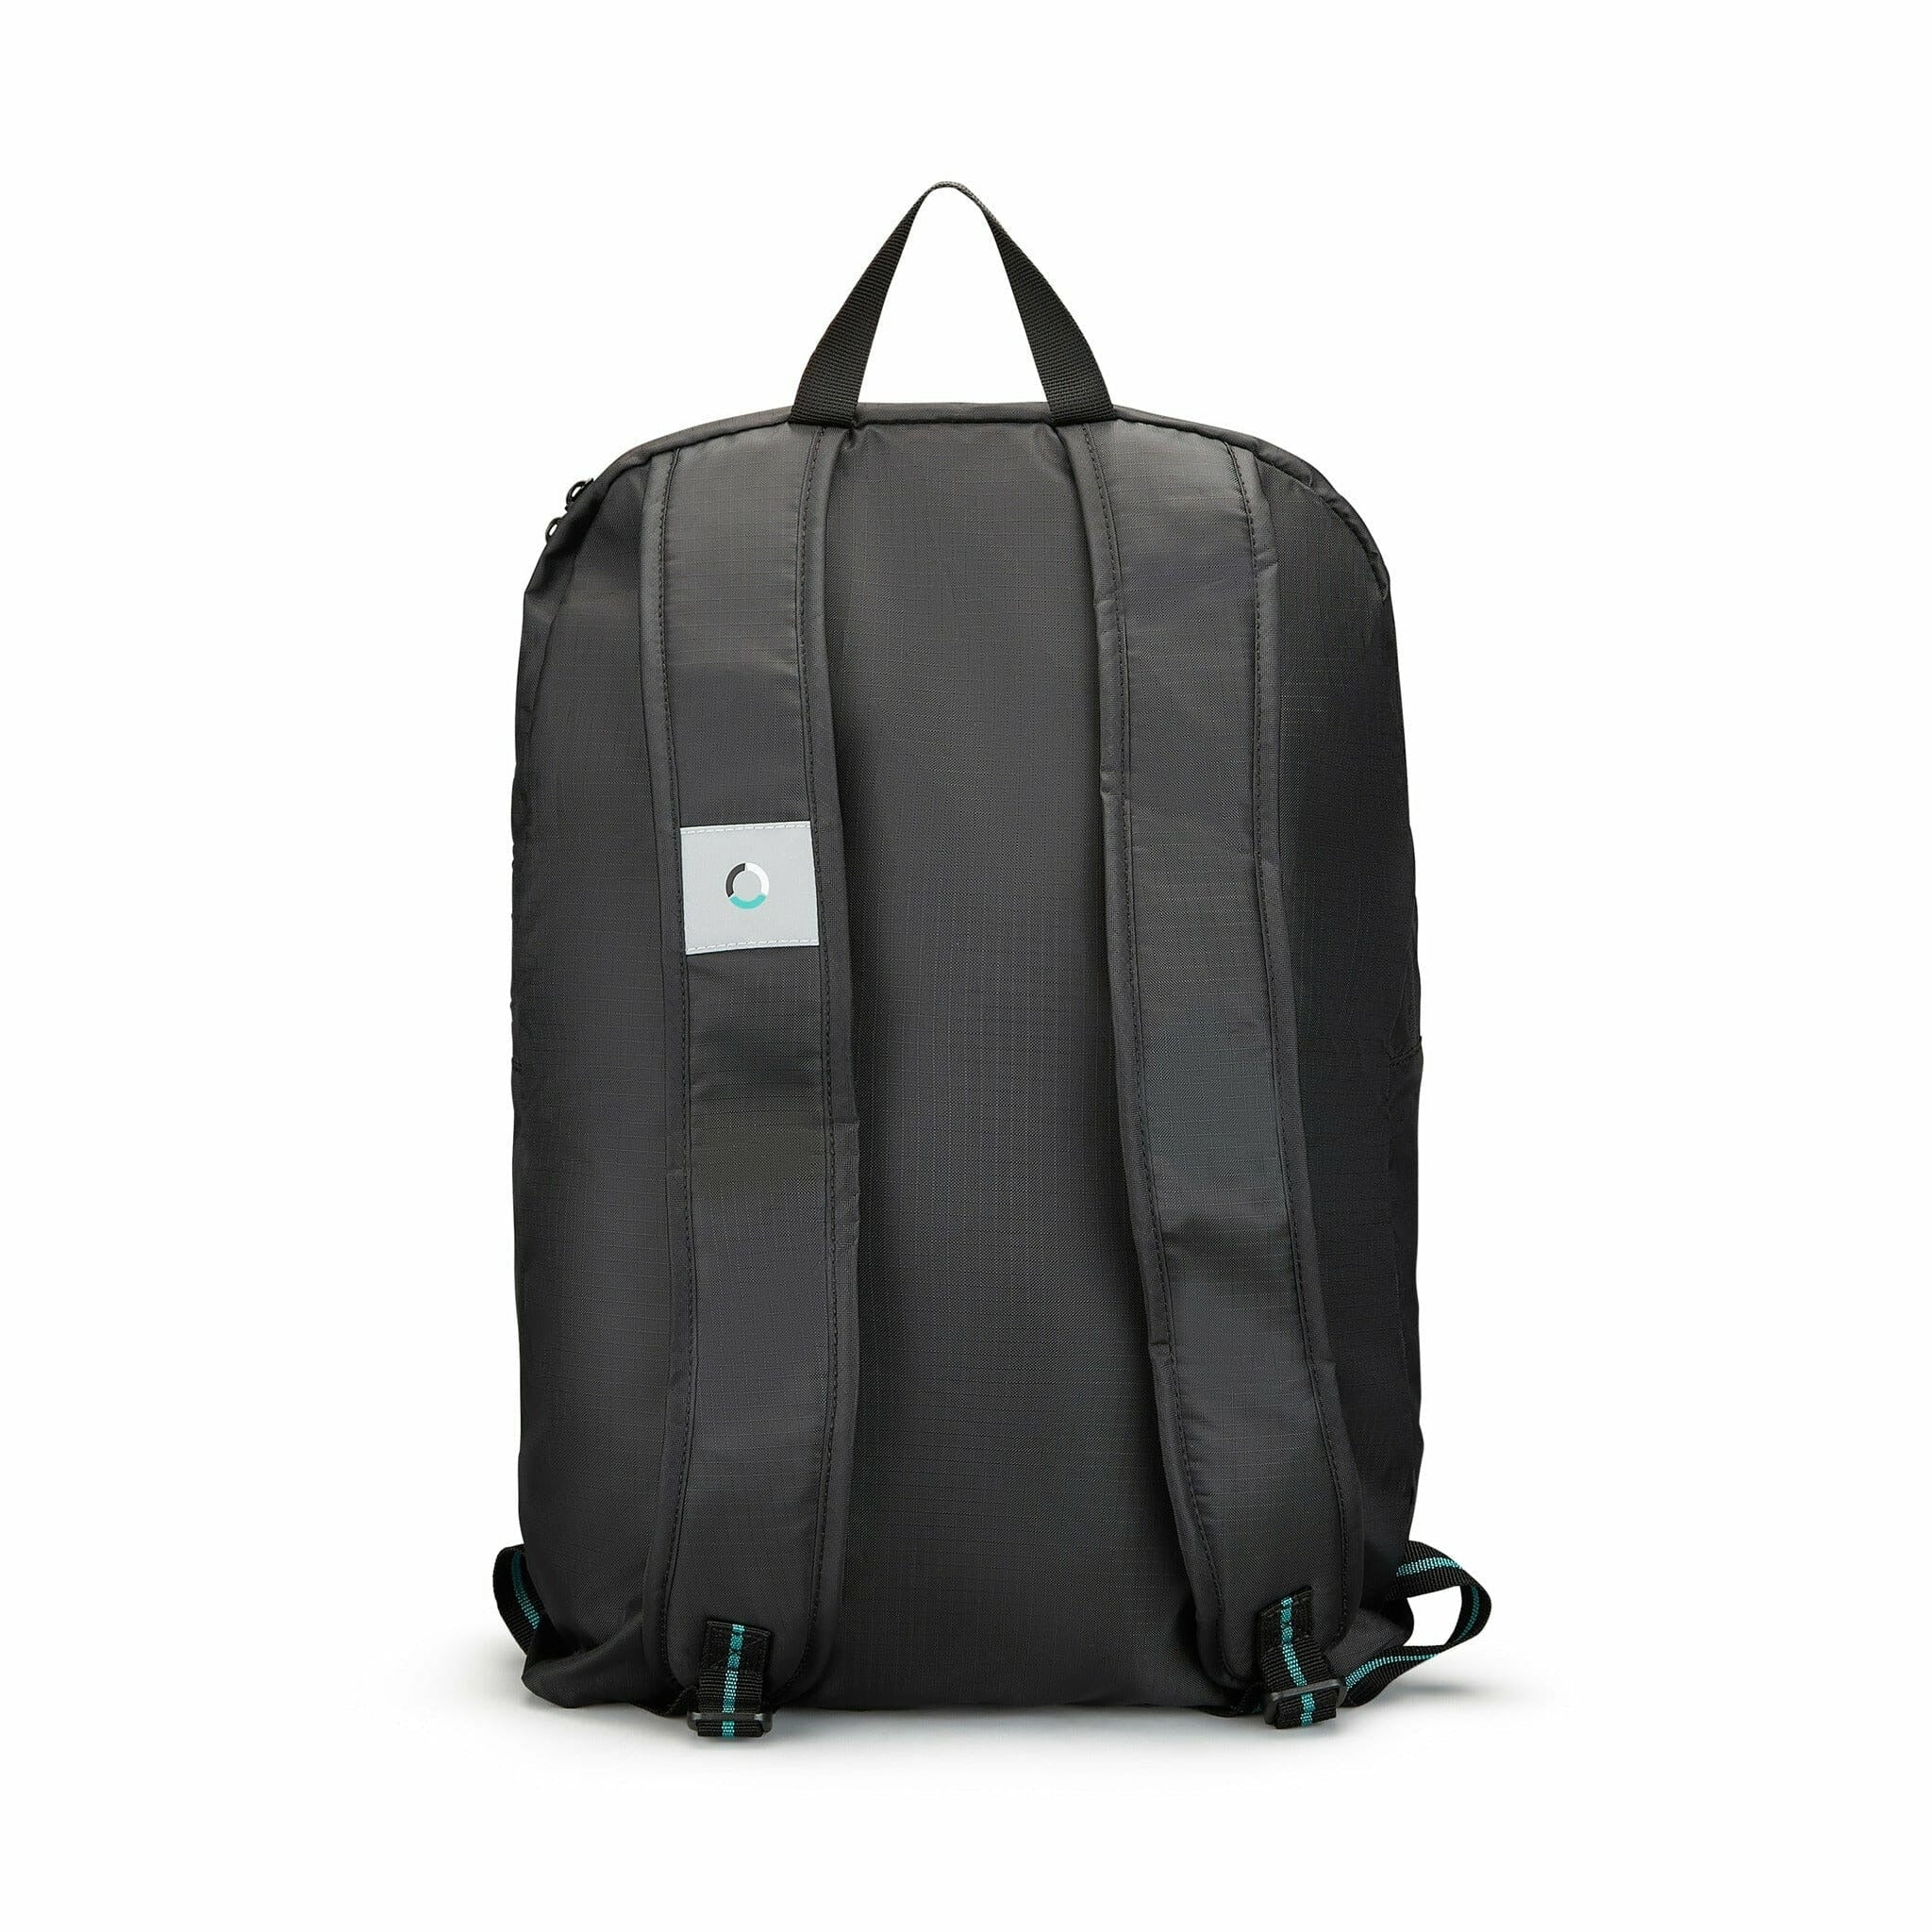 NEW Mercedes Benz Backpack Back Pack Black Laptop Office Camping